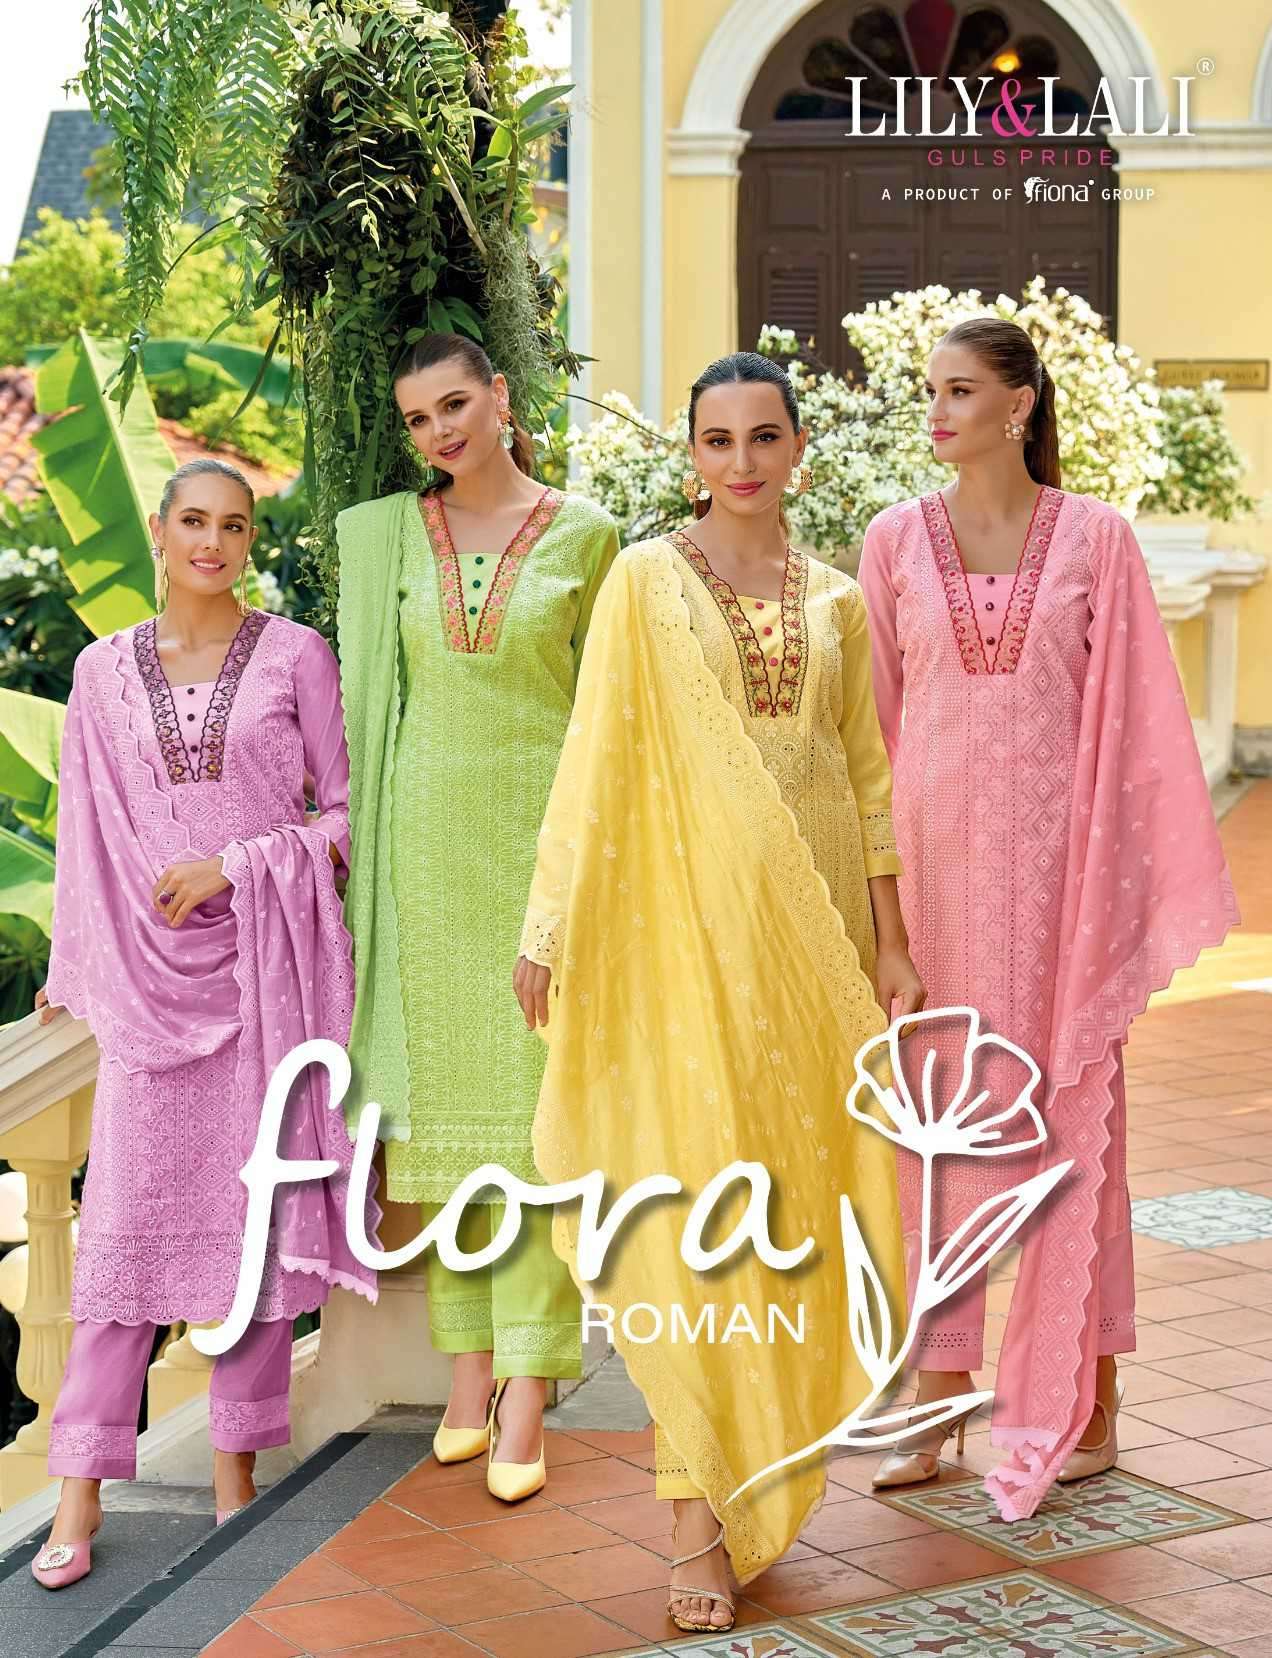 Lily And Lali Flora Roman Premium Designs Kurti Pant Dupatta Set Festive Collection